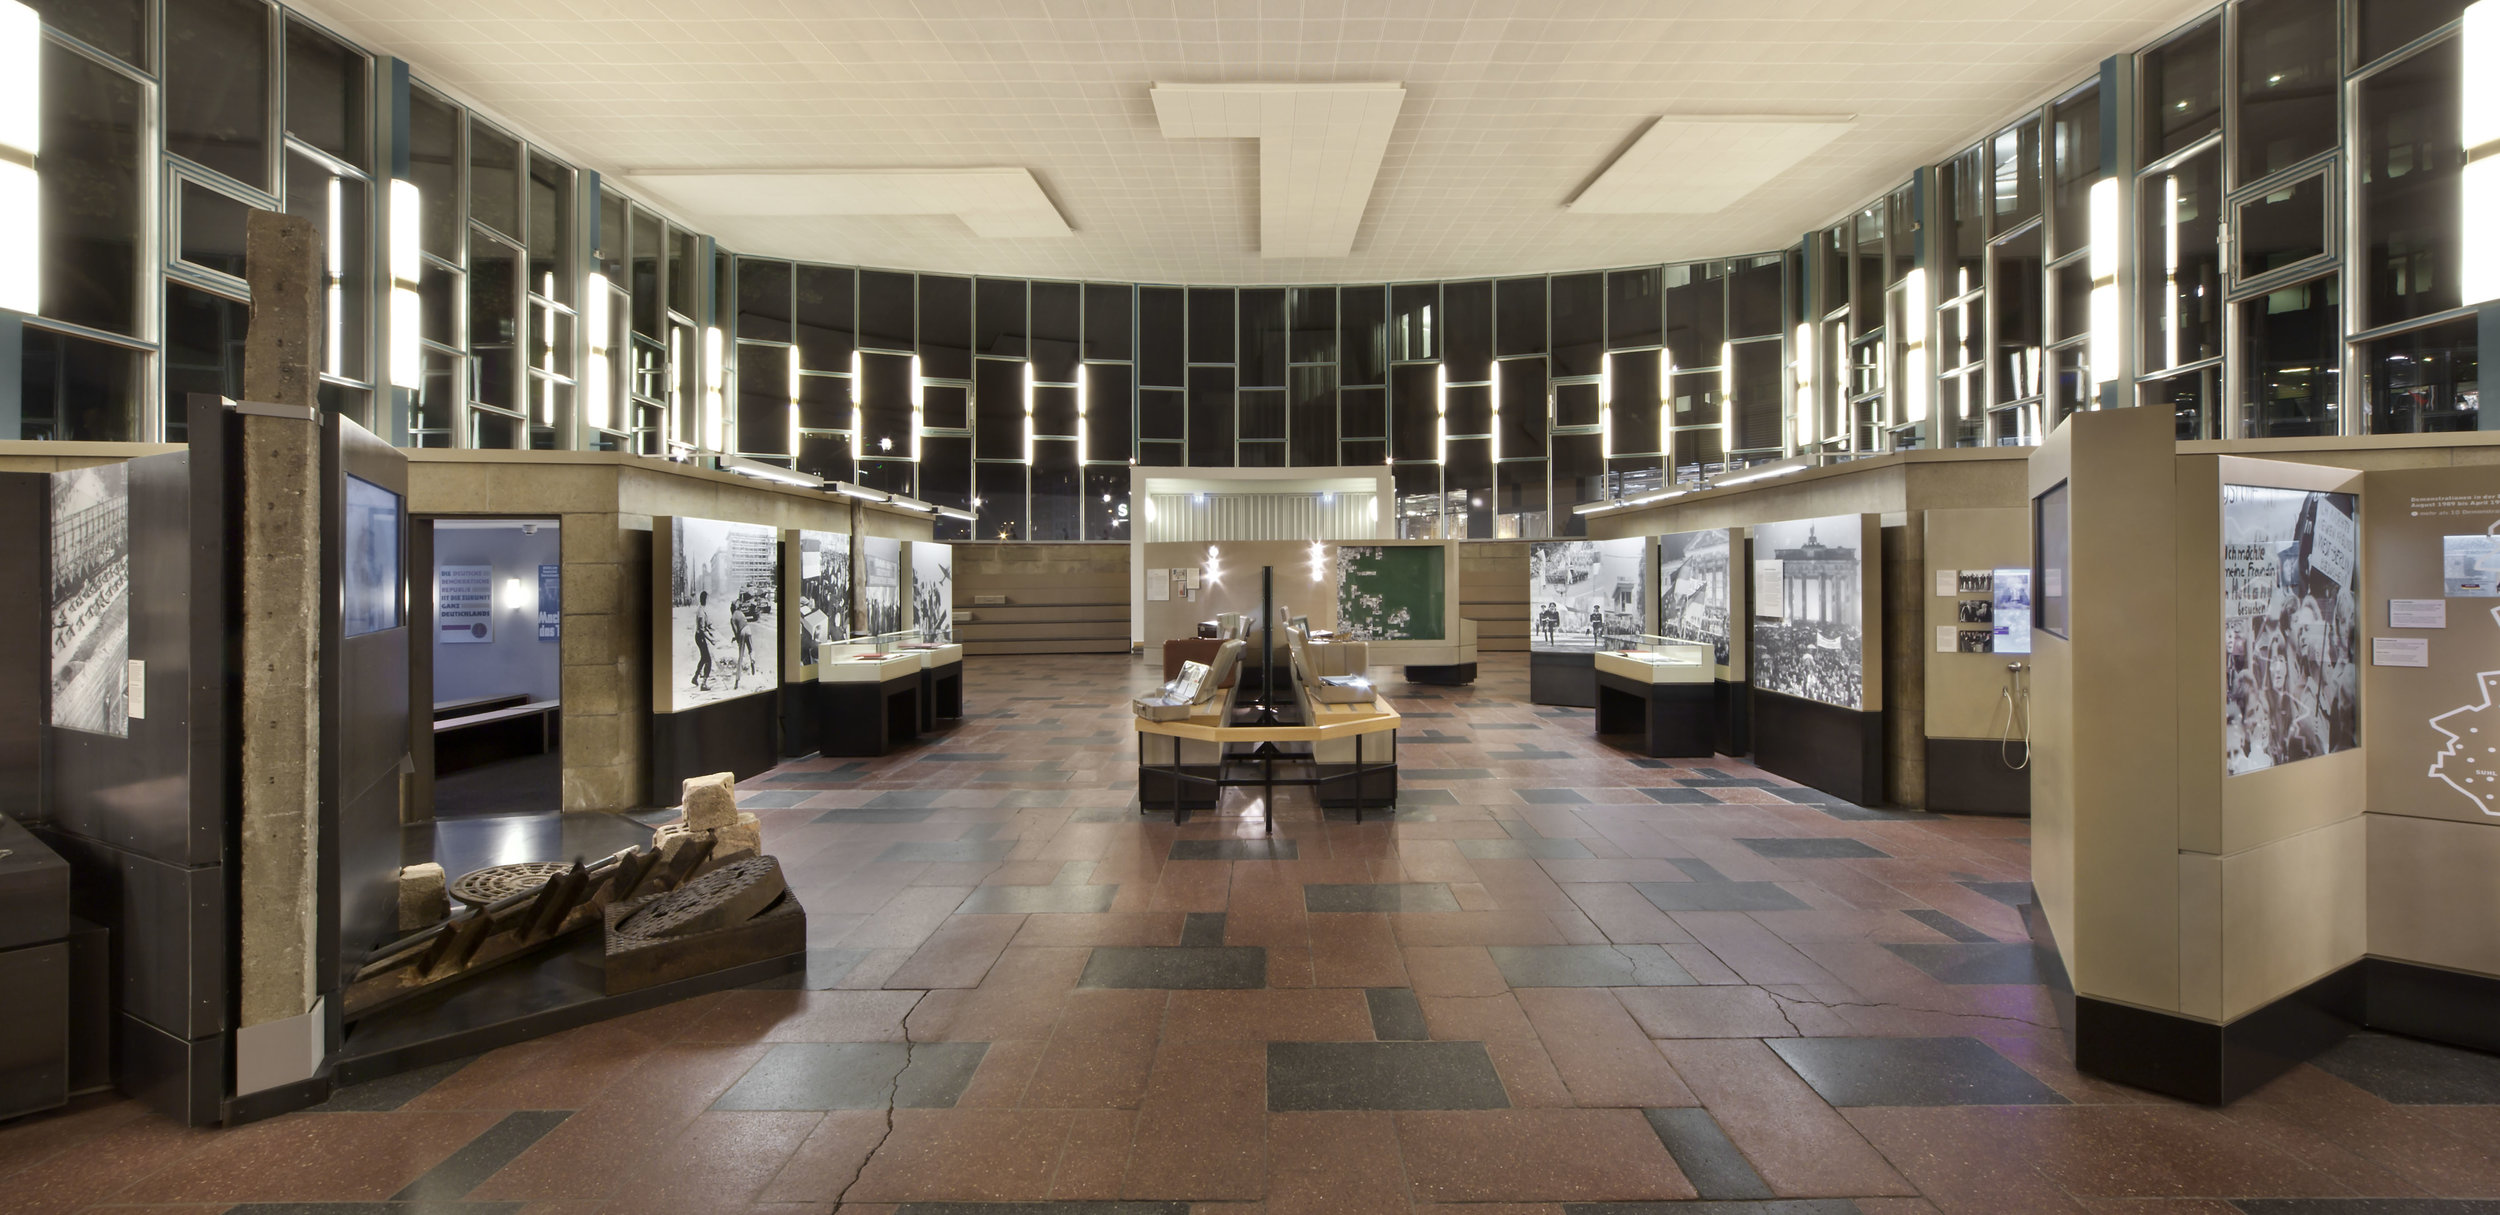 traenenpalast_museum-exhibition-design_coordination-berlin_03.jpg